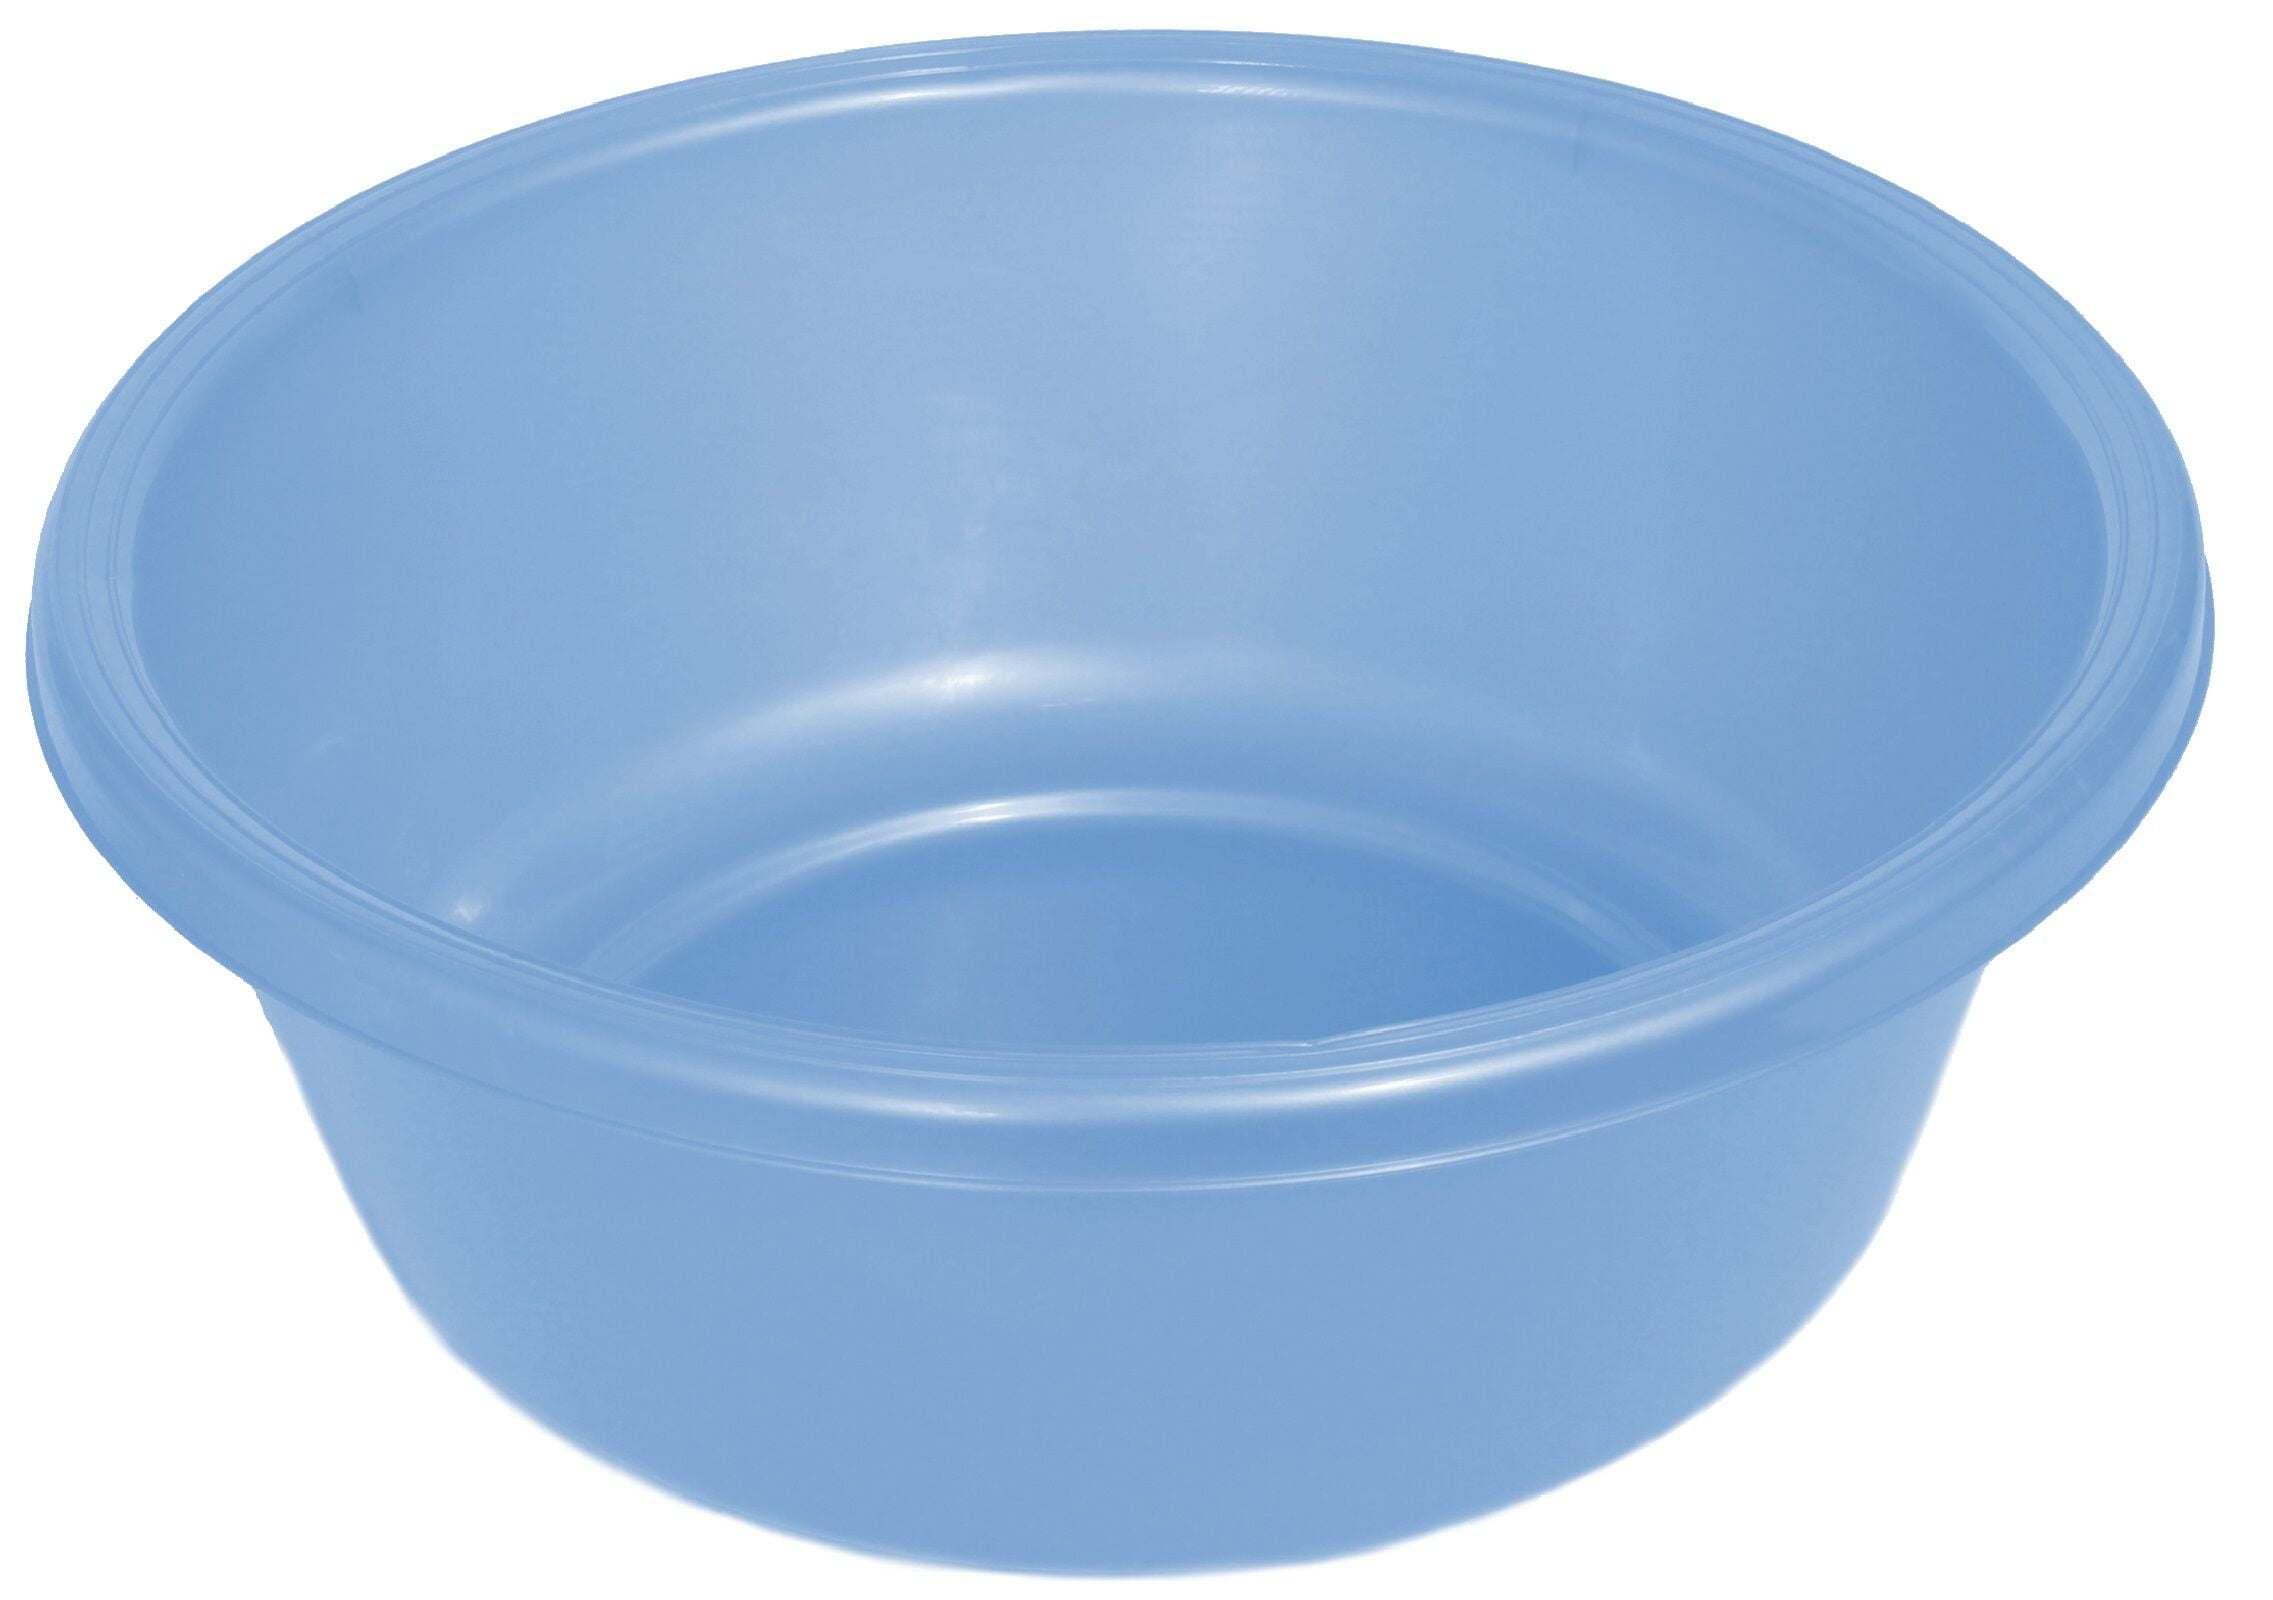 Incoc Stainless Steel Basin Bucket Dishpan Dish Washing Bowl